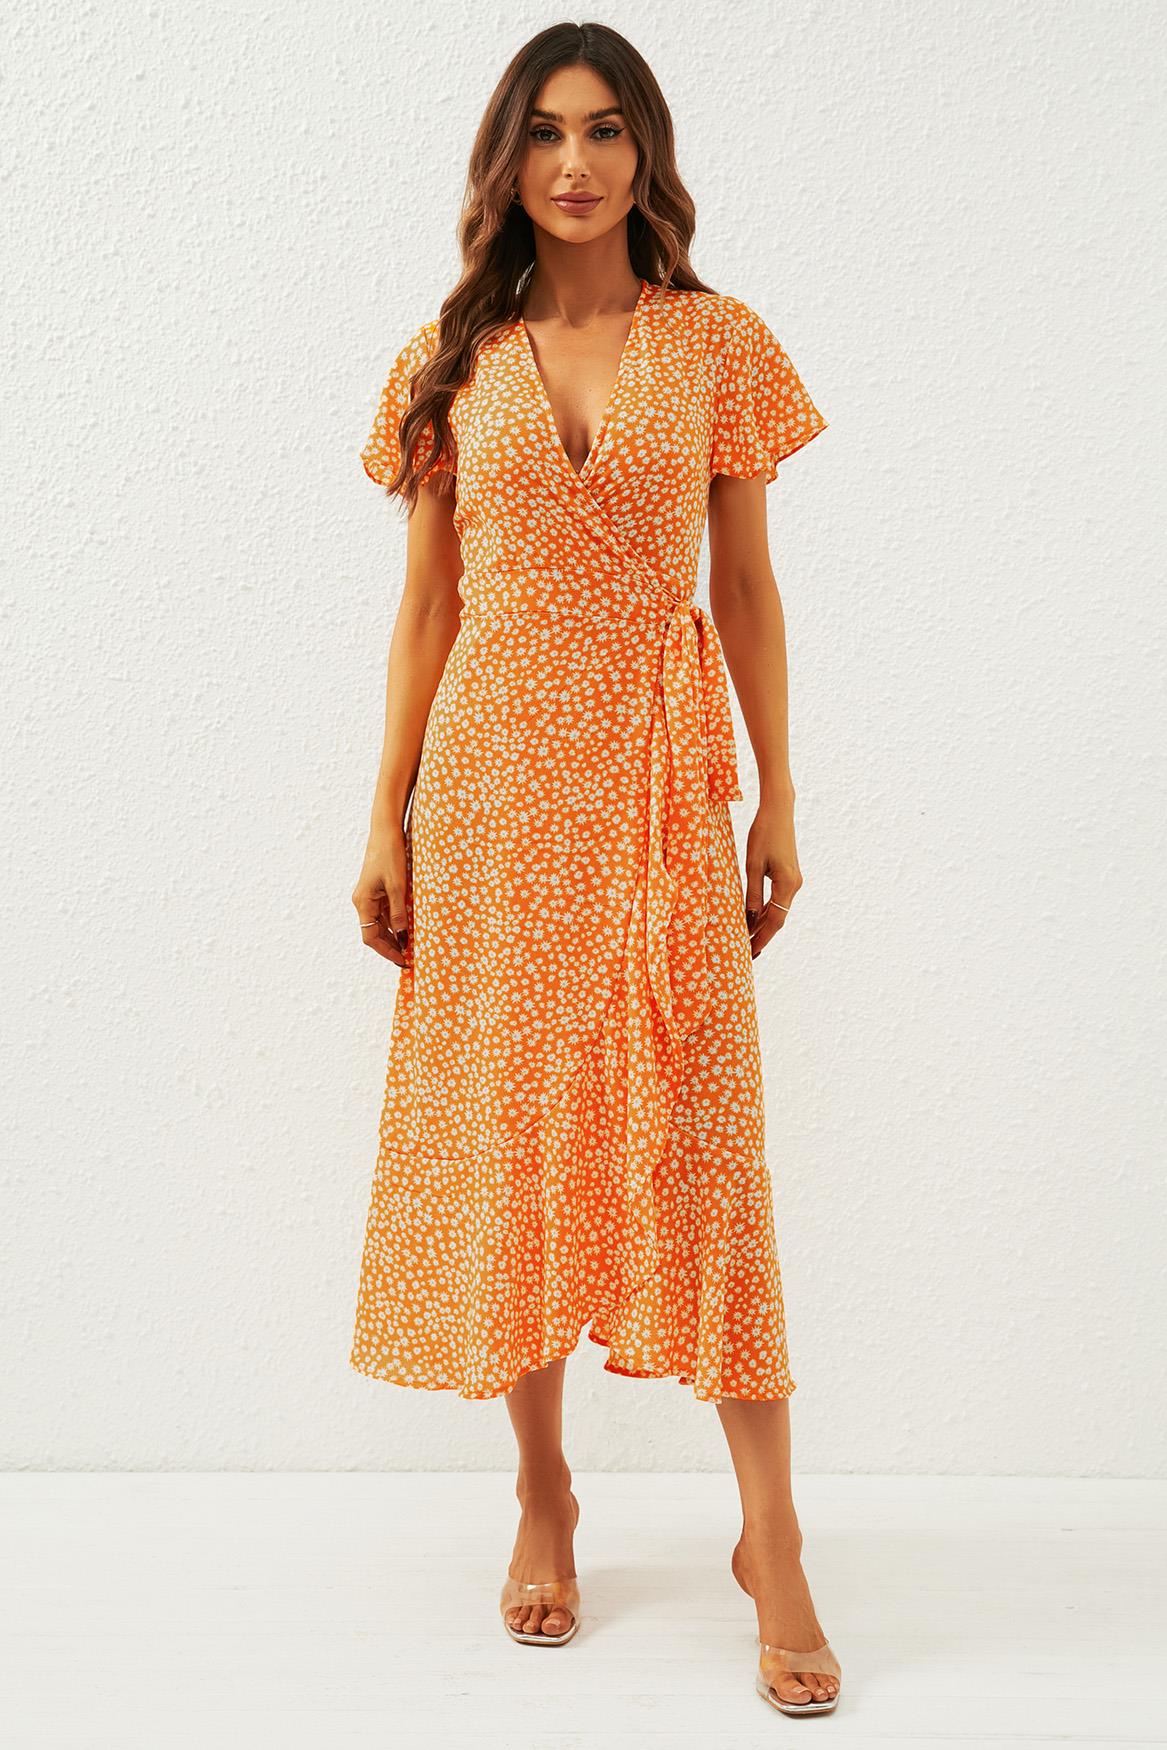 Floral Print Wrap Midi Dress In Orange Yellow FS553